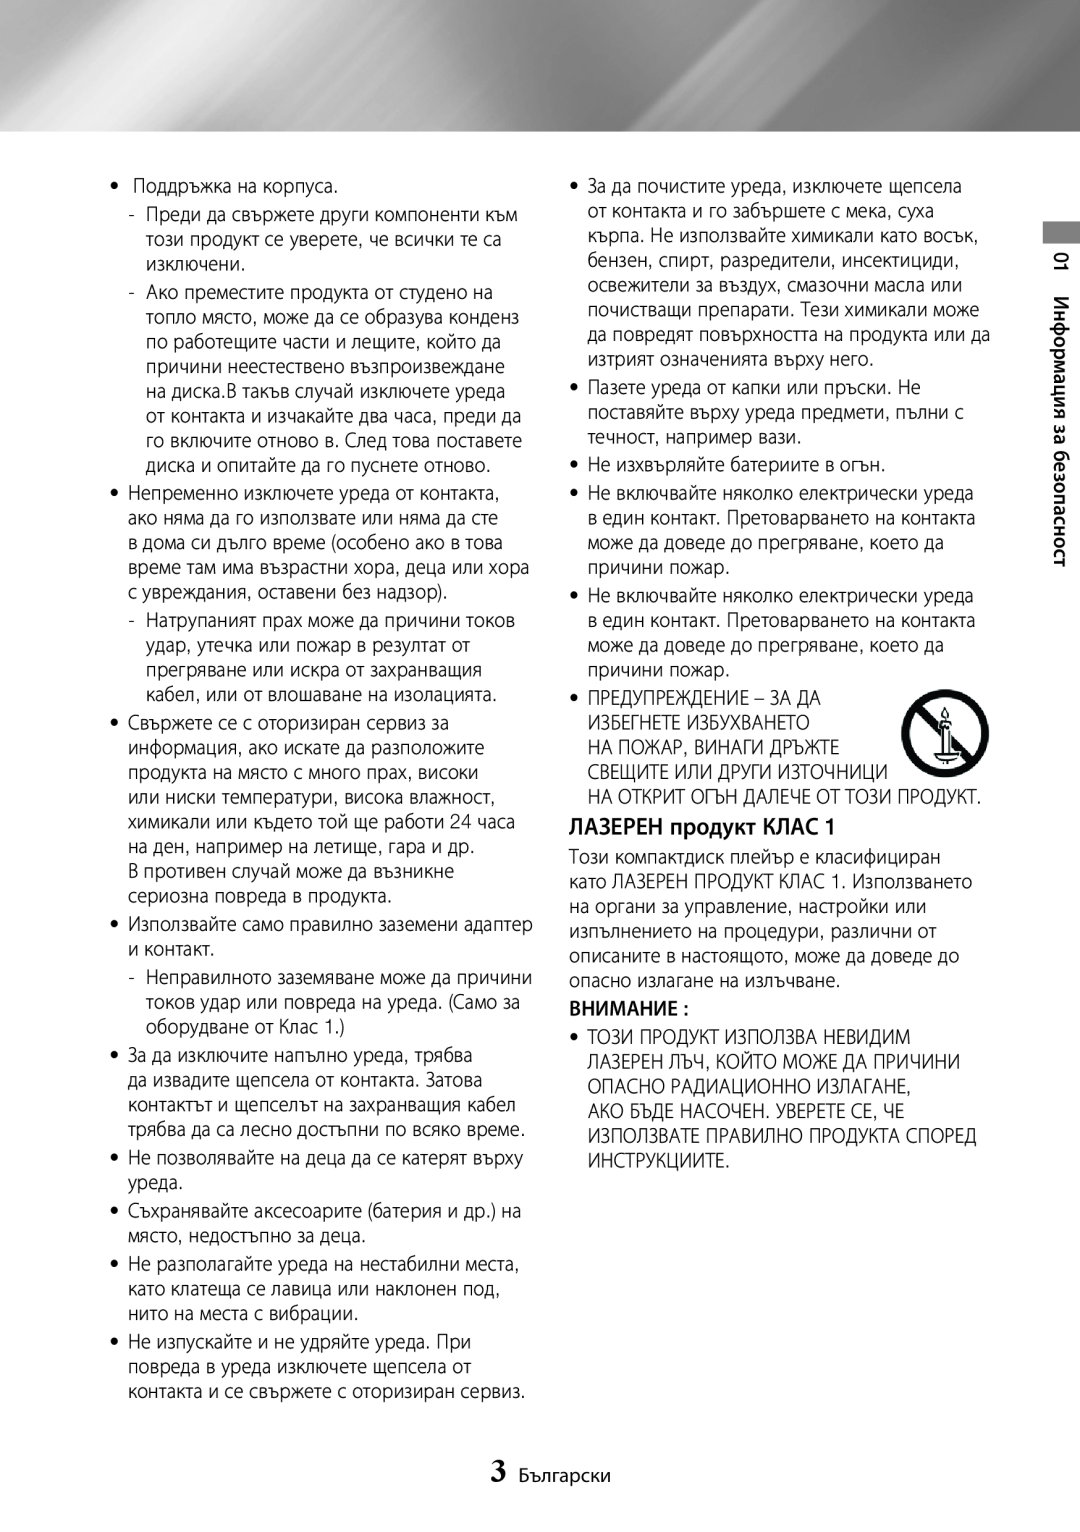 Samsung BD-J7500/EN manual 01 Информация за безопасност, 3 Български 